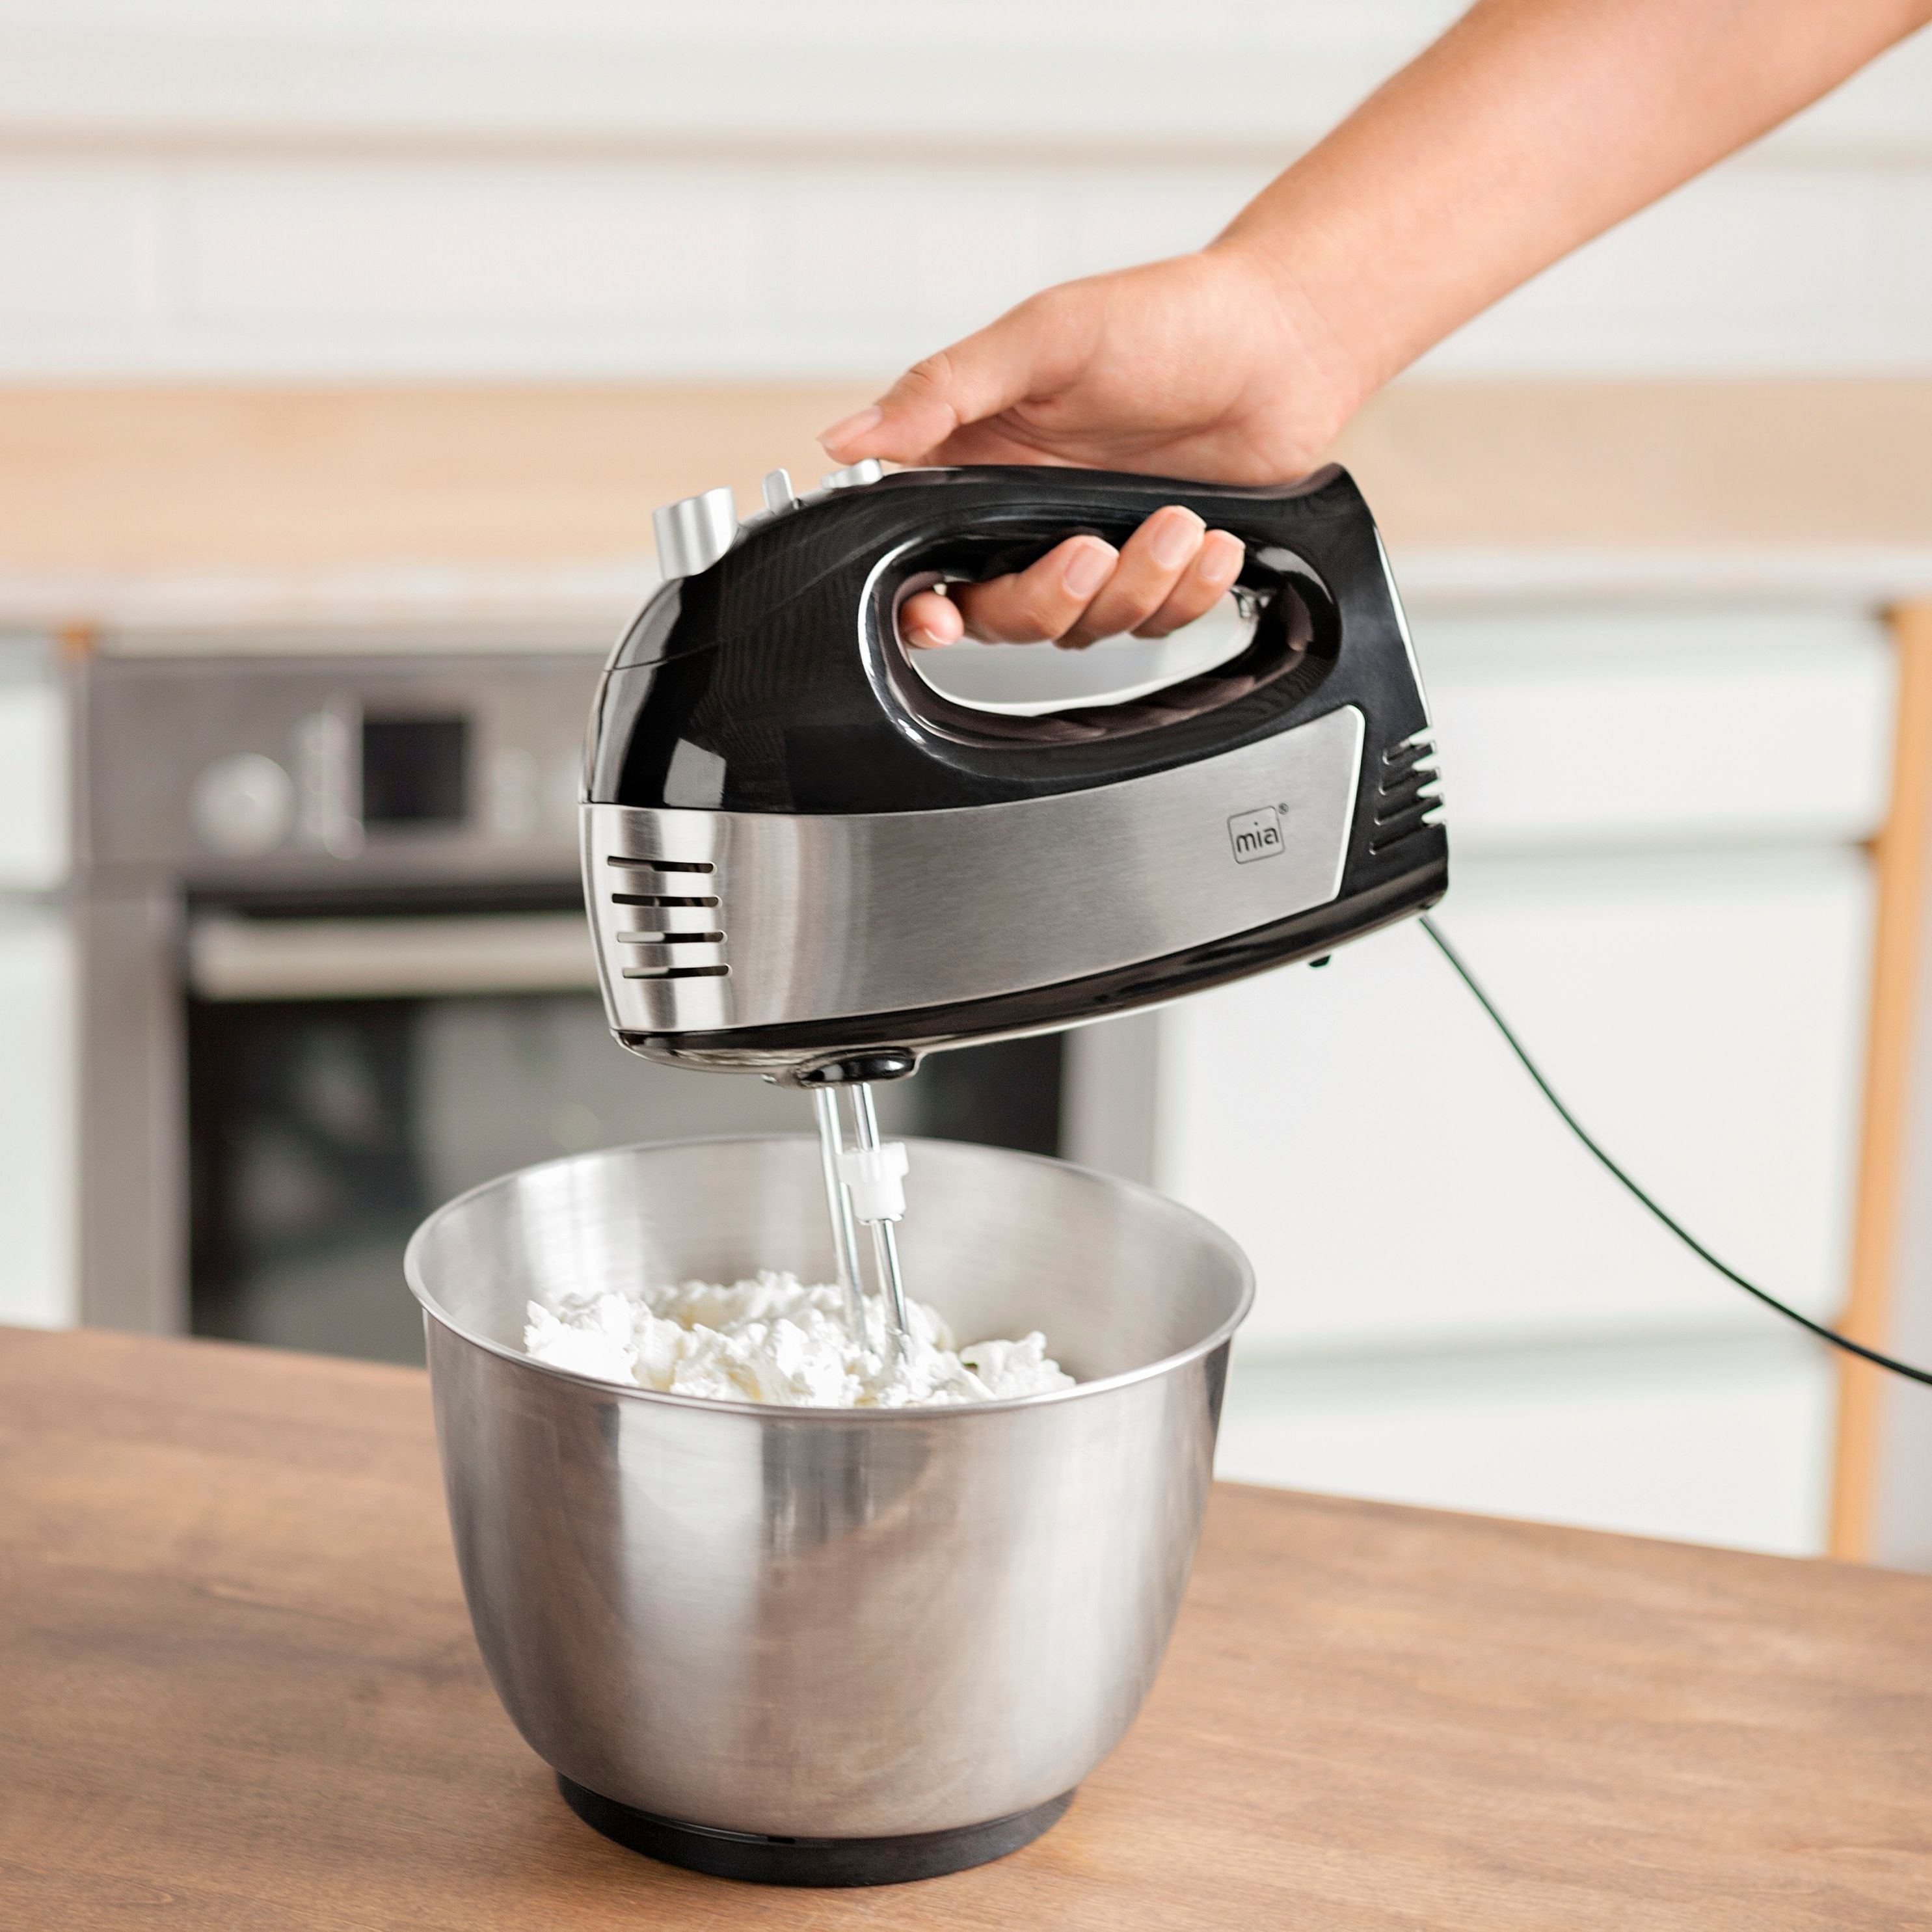 Kompakt Küchenmaschine Handmixer mit Rührschüssel | Weltbild.de